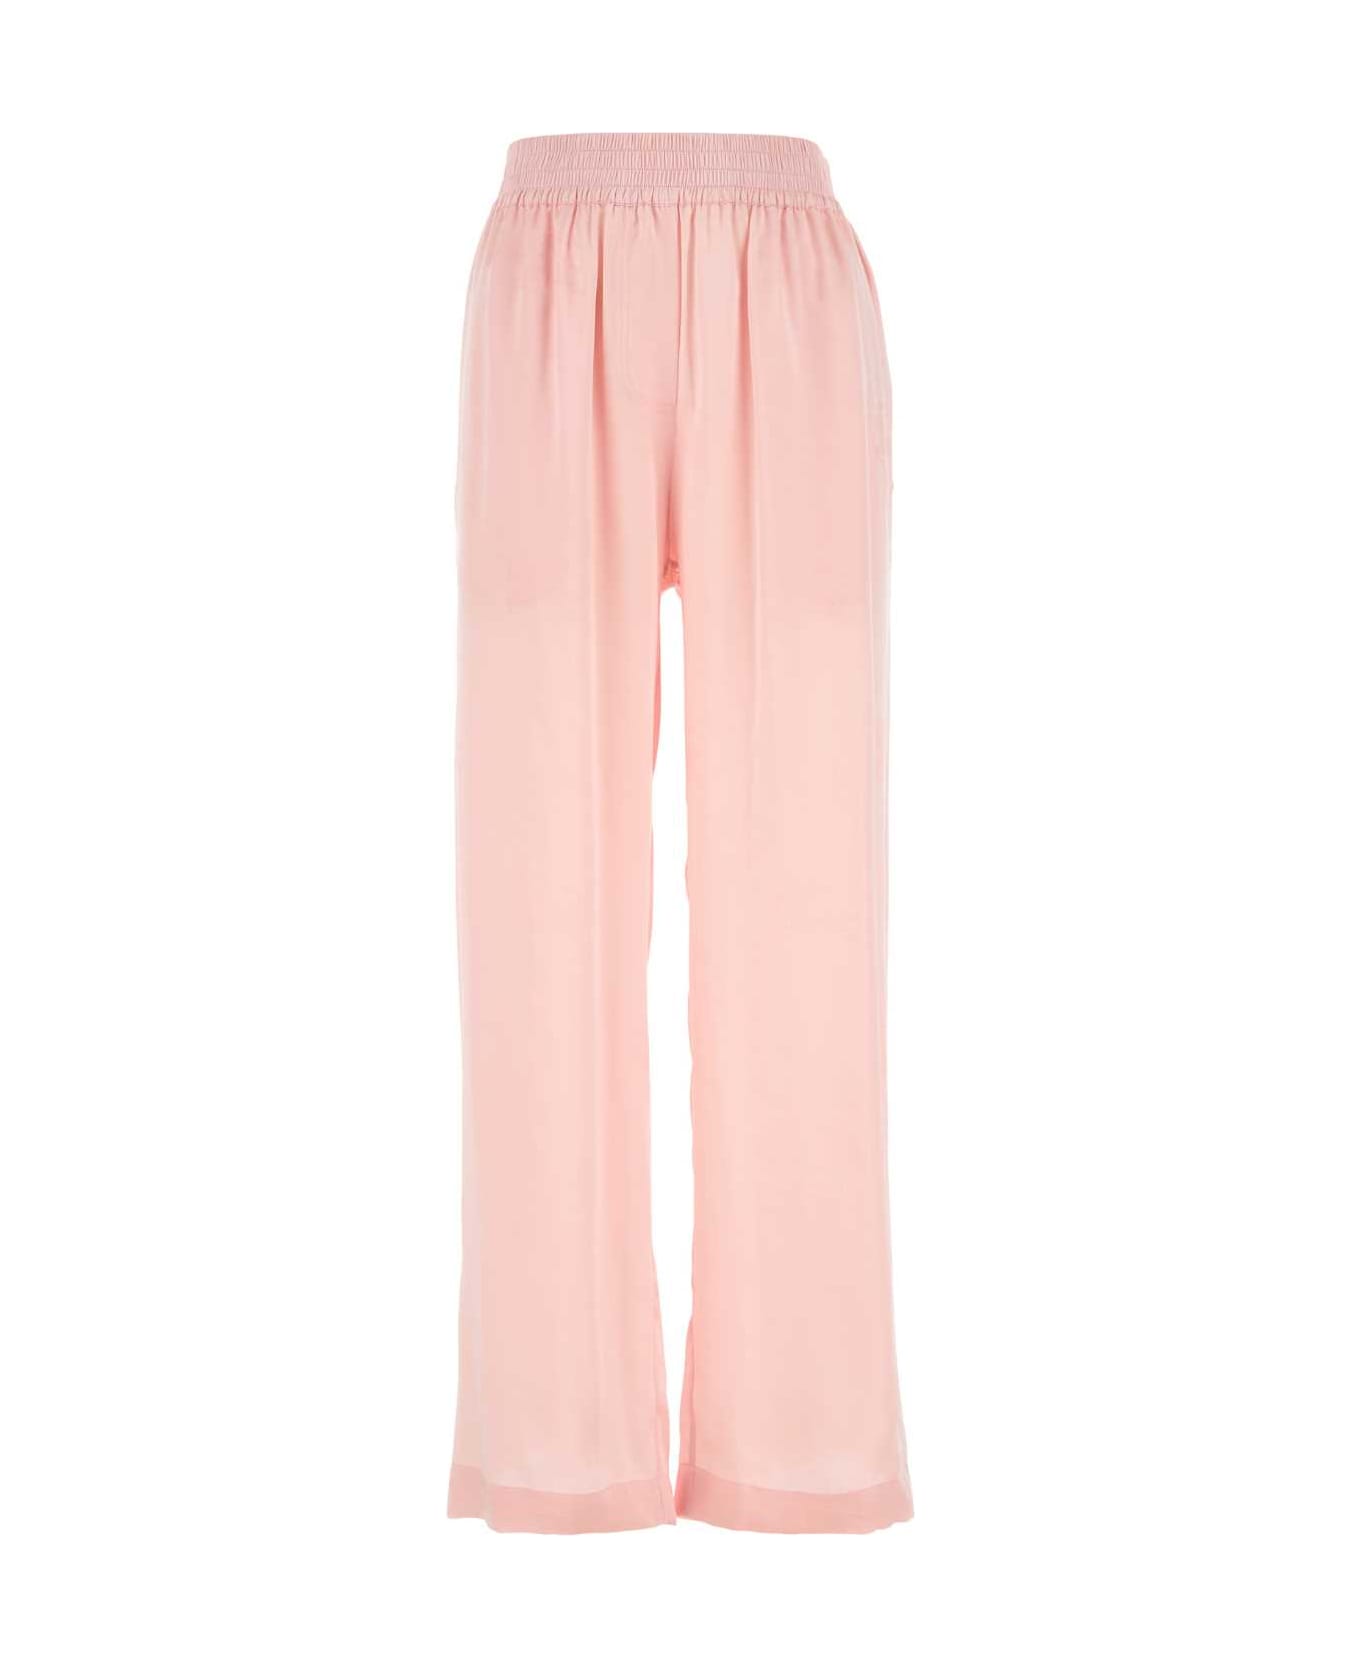 Burberry Pastel Pink Satin Pyjama Pant - SOFTBLOSSOM